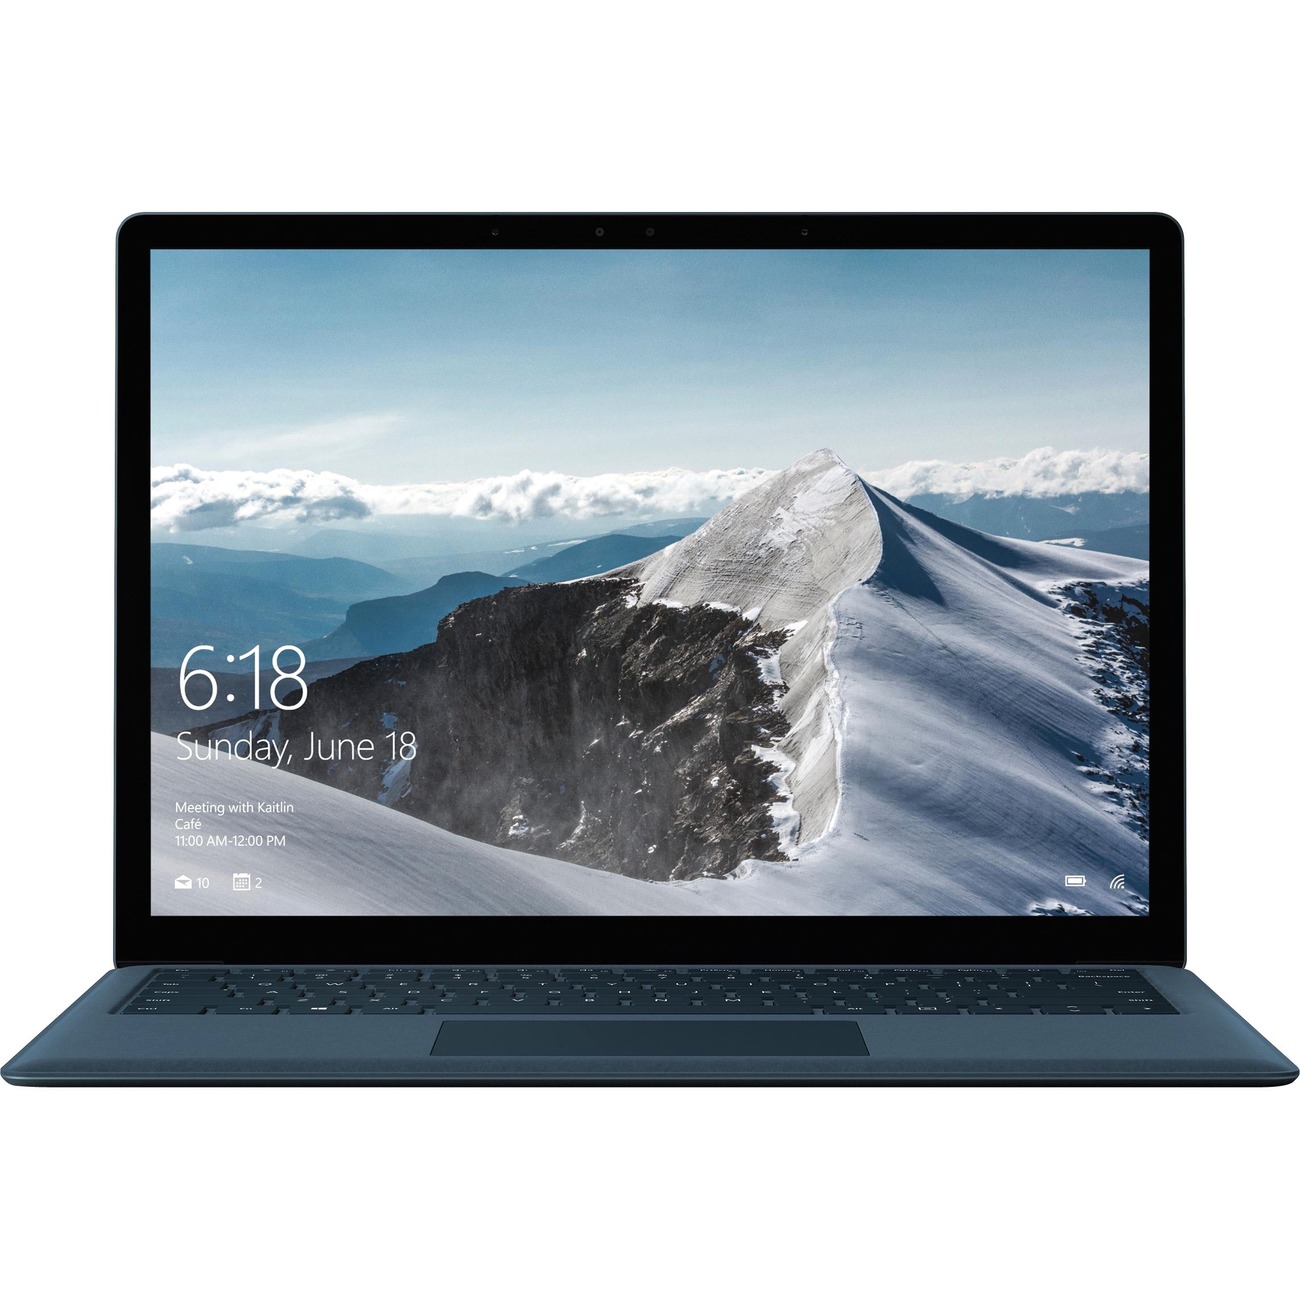 Microsoft Laptop Surface Laptop Intel Core i7 7th Gen 7660U (2.50 